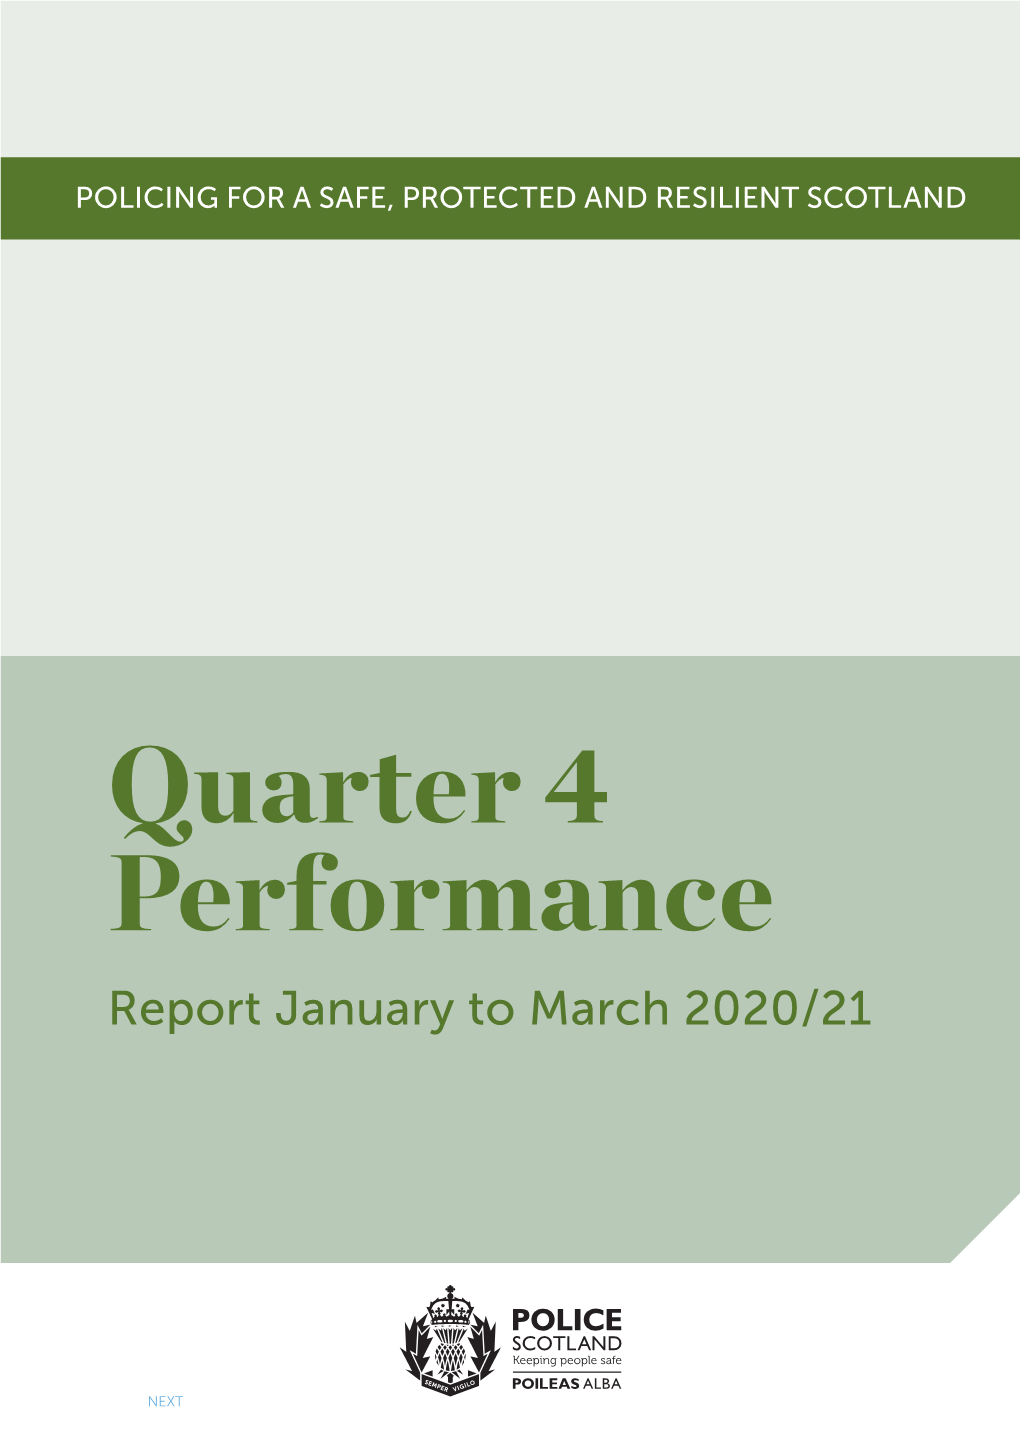 Performance Report Quarter 4 2020/21